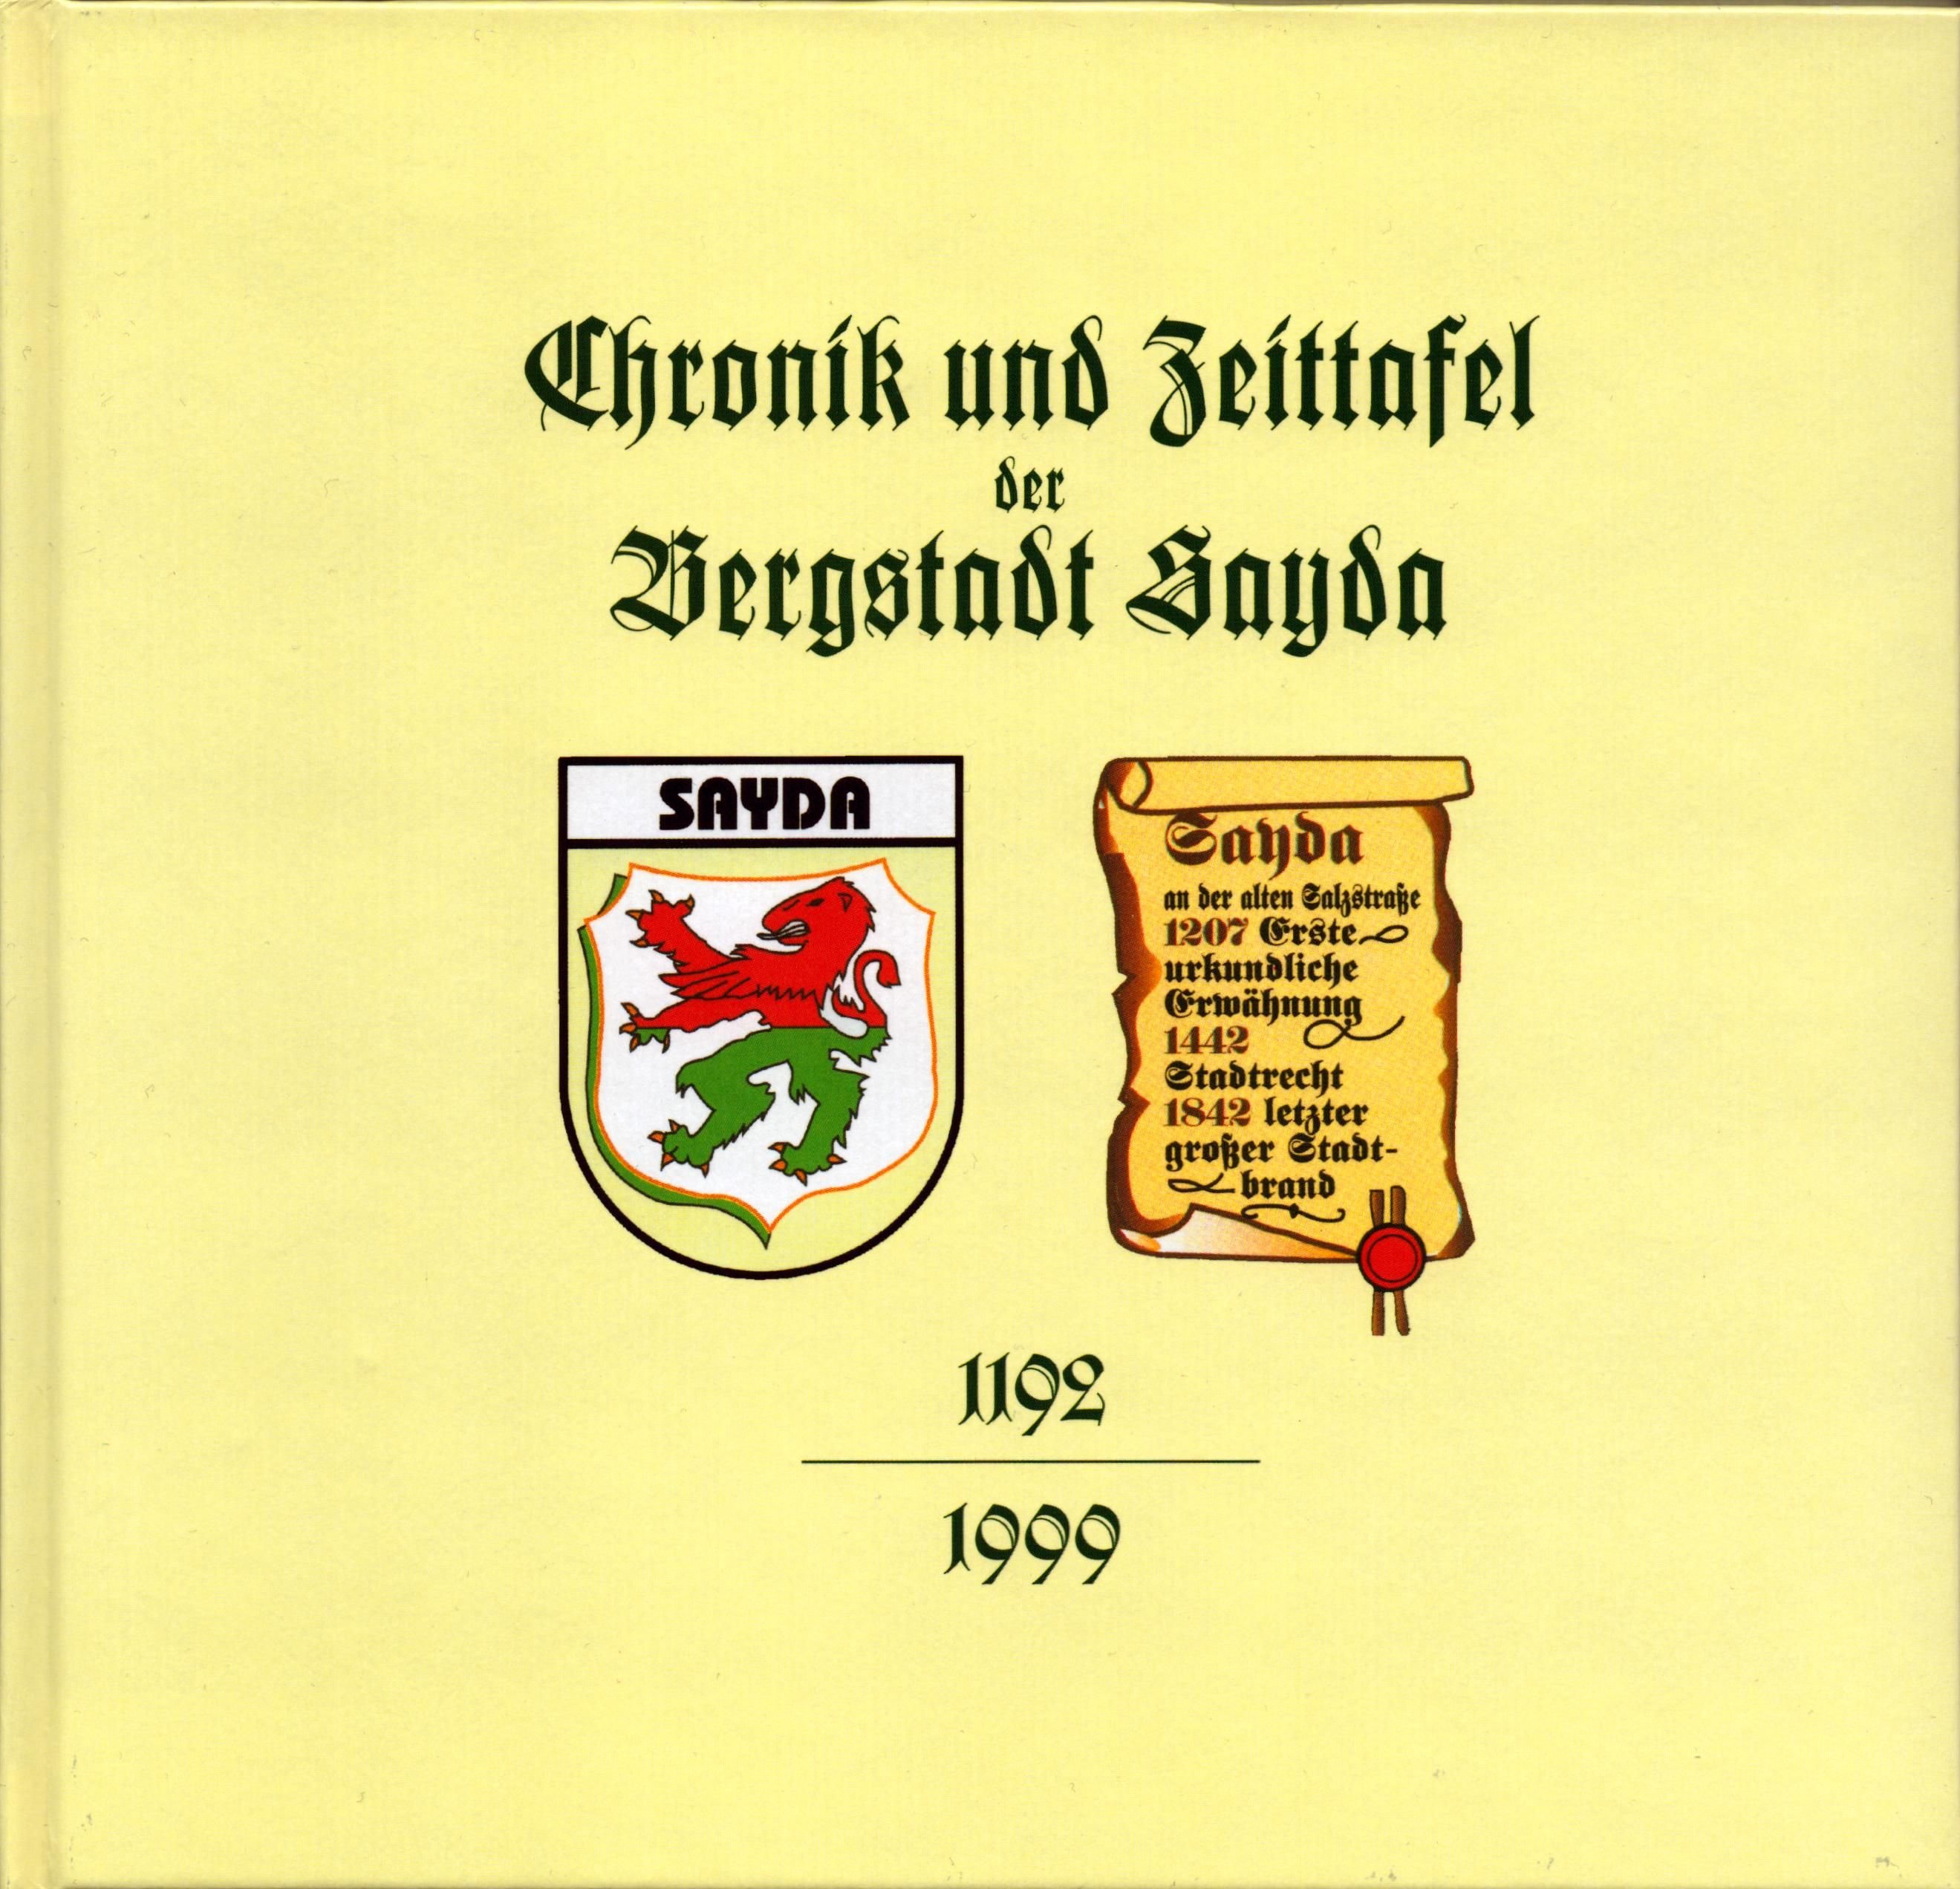 Chronik und Zeittafel der Bergstadt Sayda 1192 - 1999 (Archiv SAXONIA-FREIBERG-STIFTUNG CC BY-NC-SA)